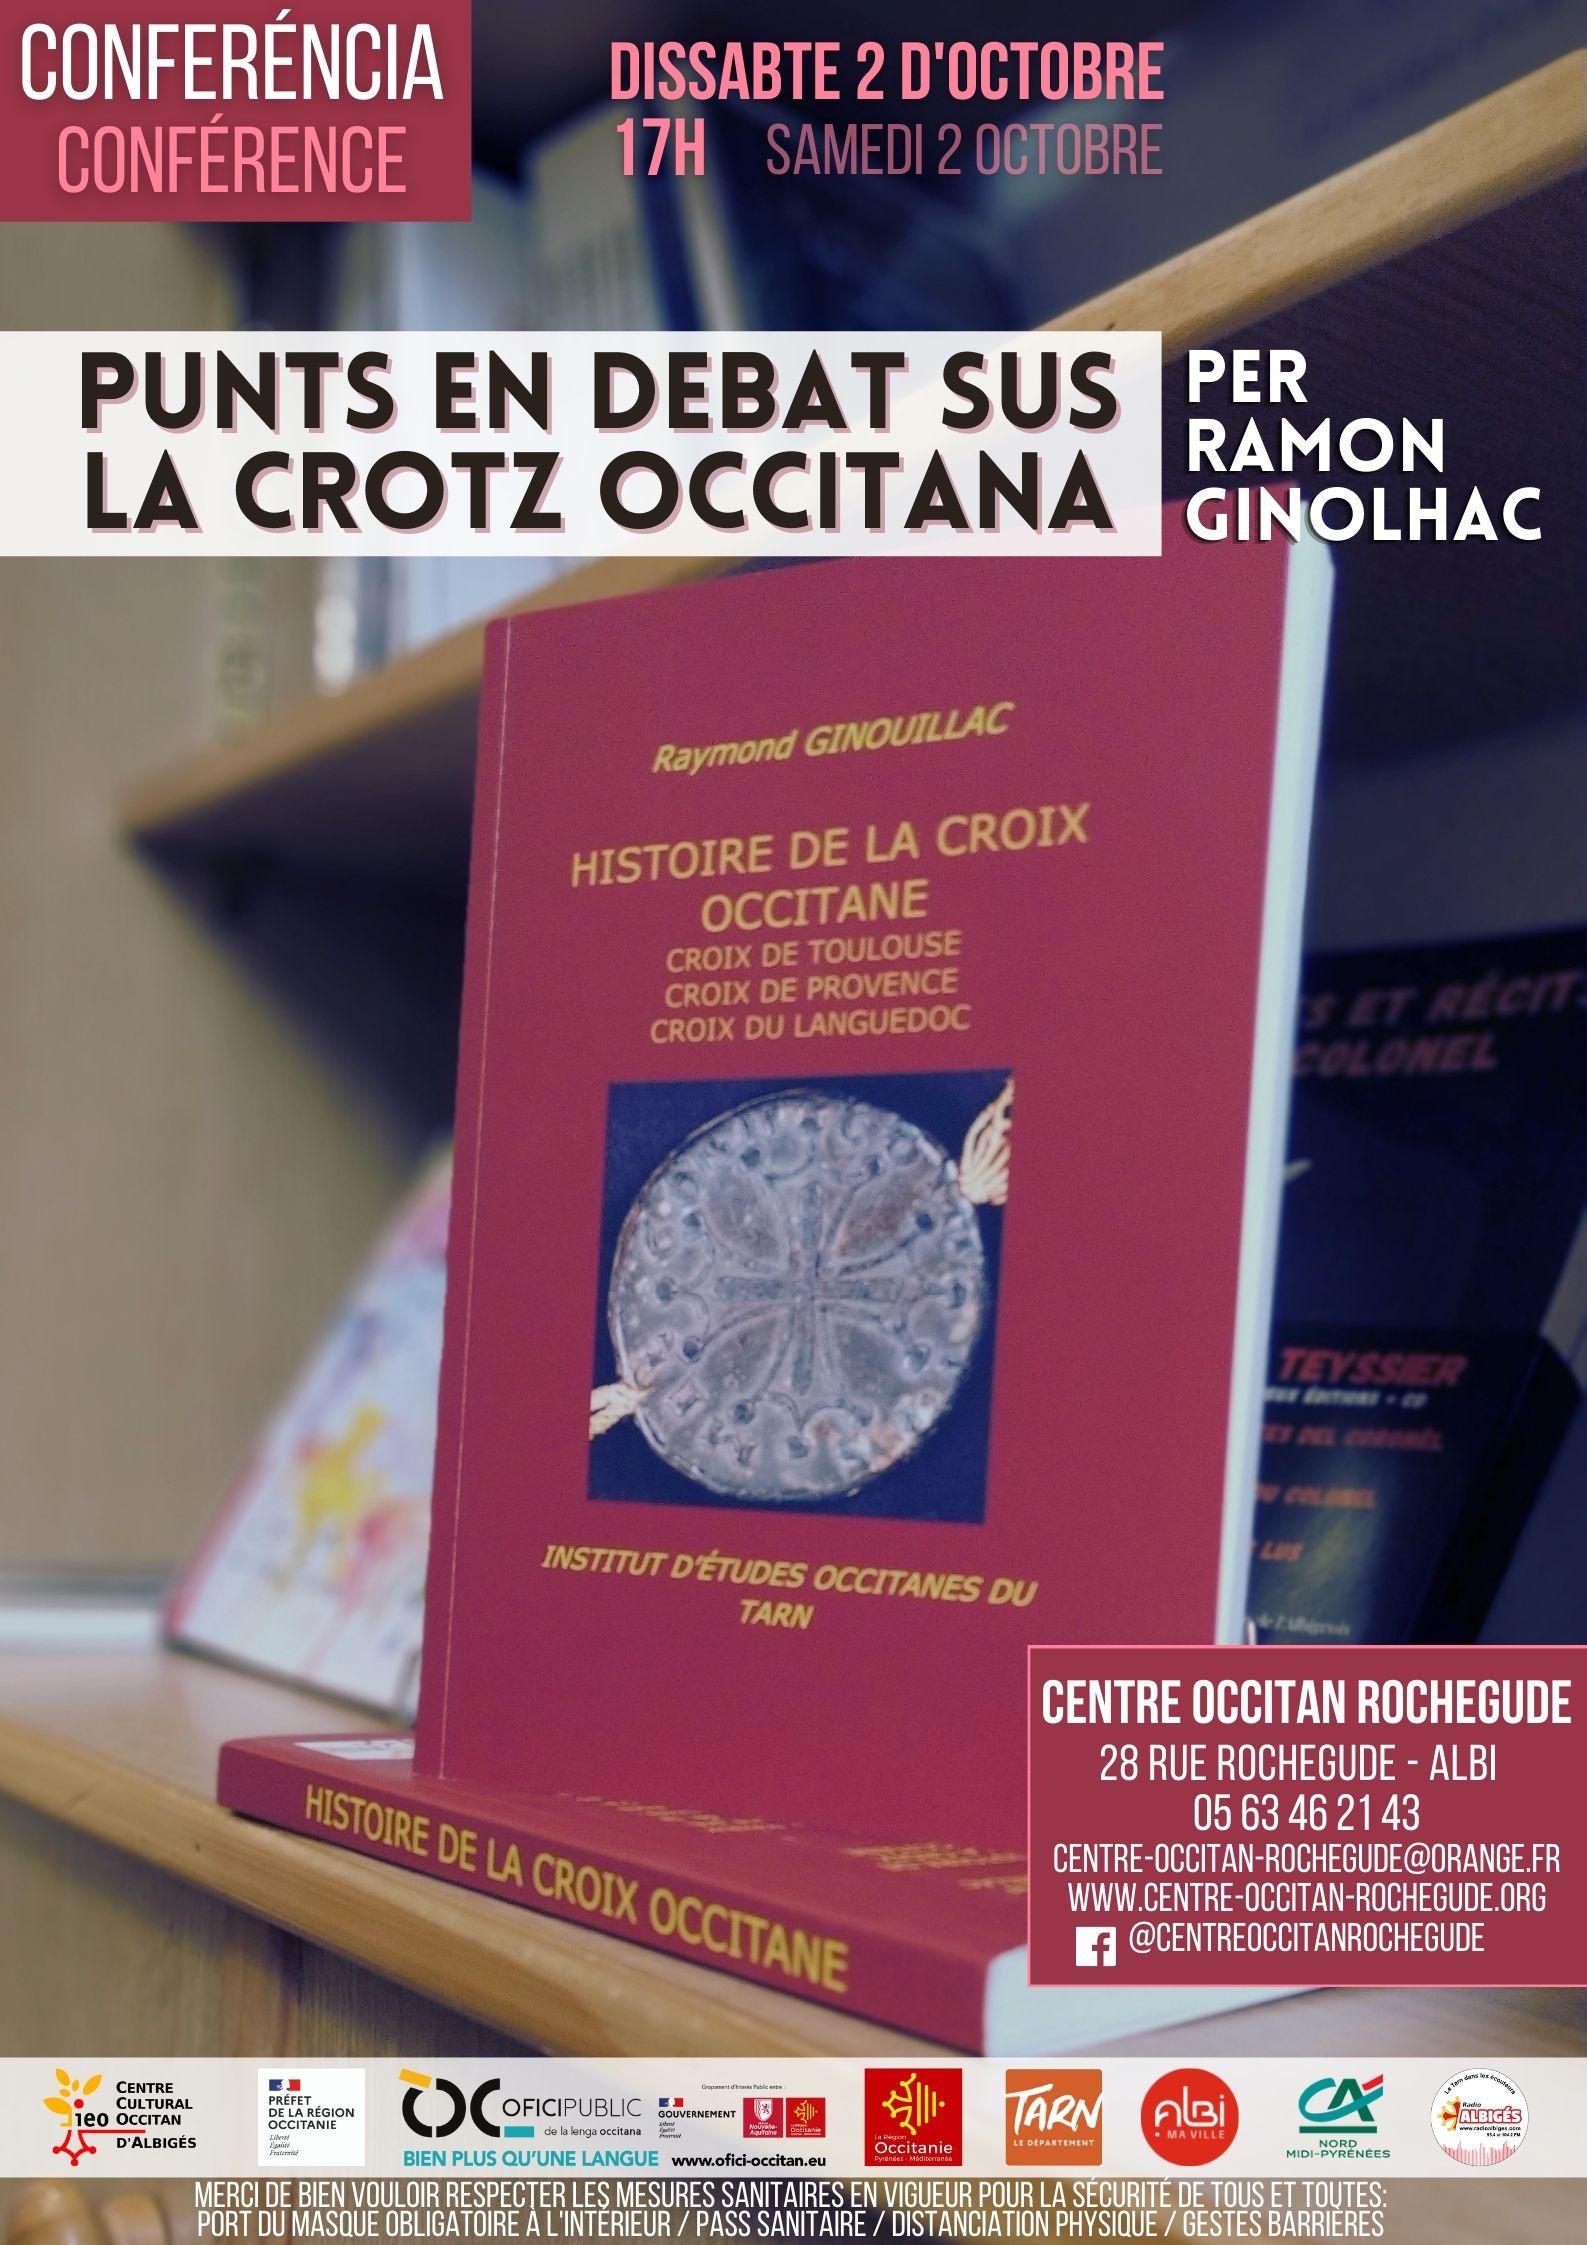 You are currently viewing Conferéncia “Punts en debat sus la crotz occitana” per Ramon Ginolhac